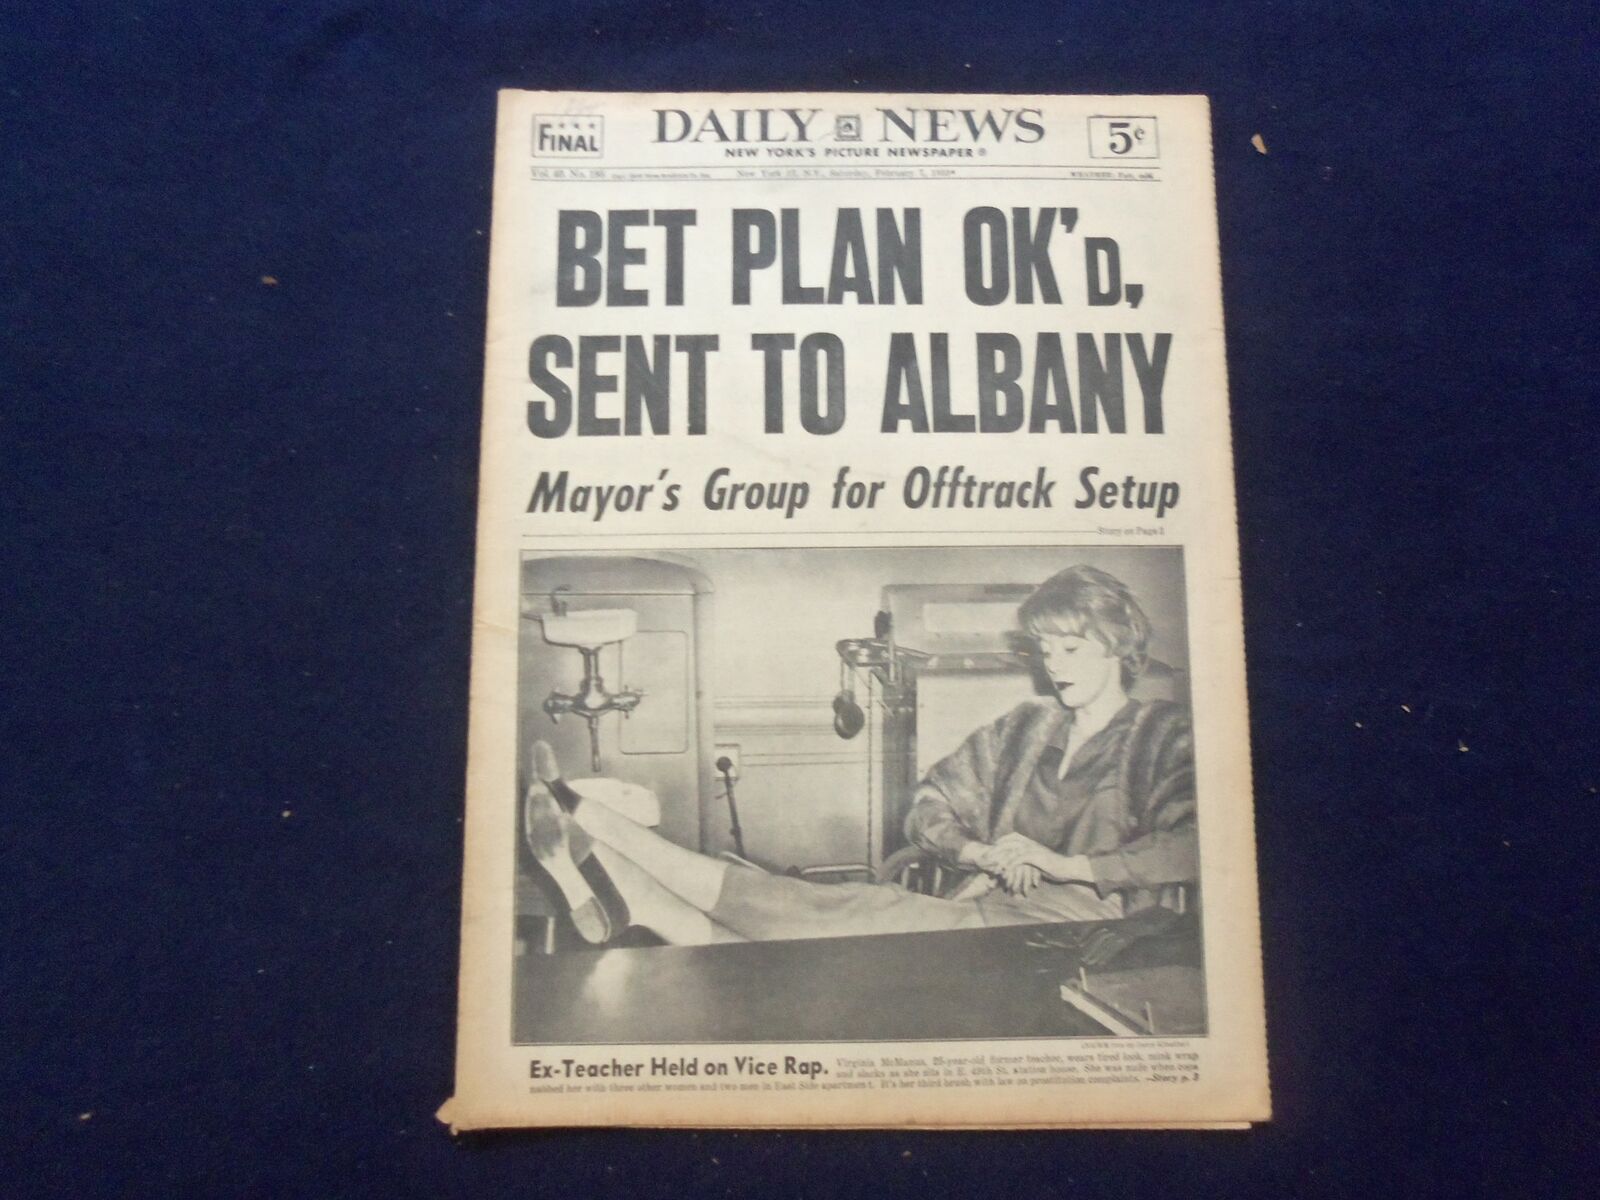 1959 FEB 7 NEW YORK DAILY NEWS NEWSPAPER -BET PLAN OK'D, SENT TO ALBANY- NP 6754